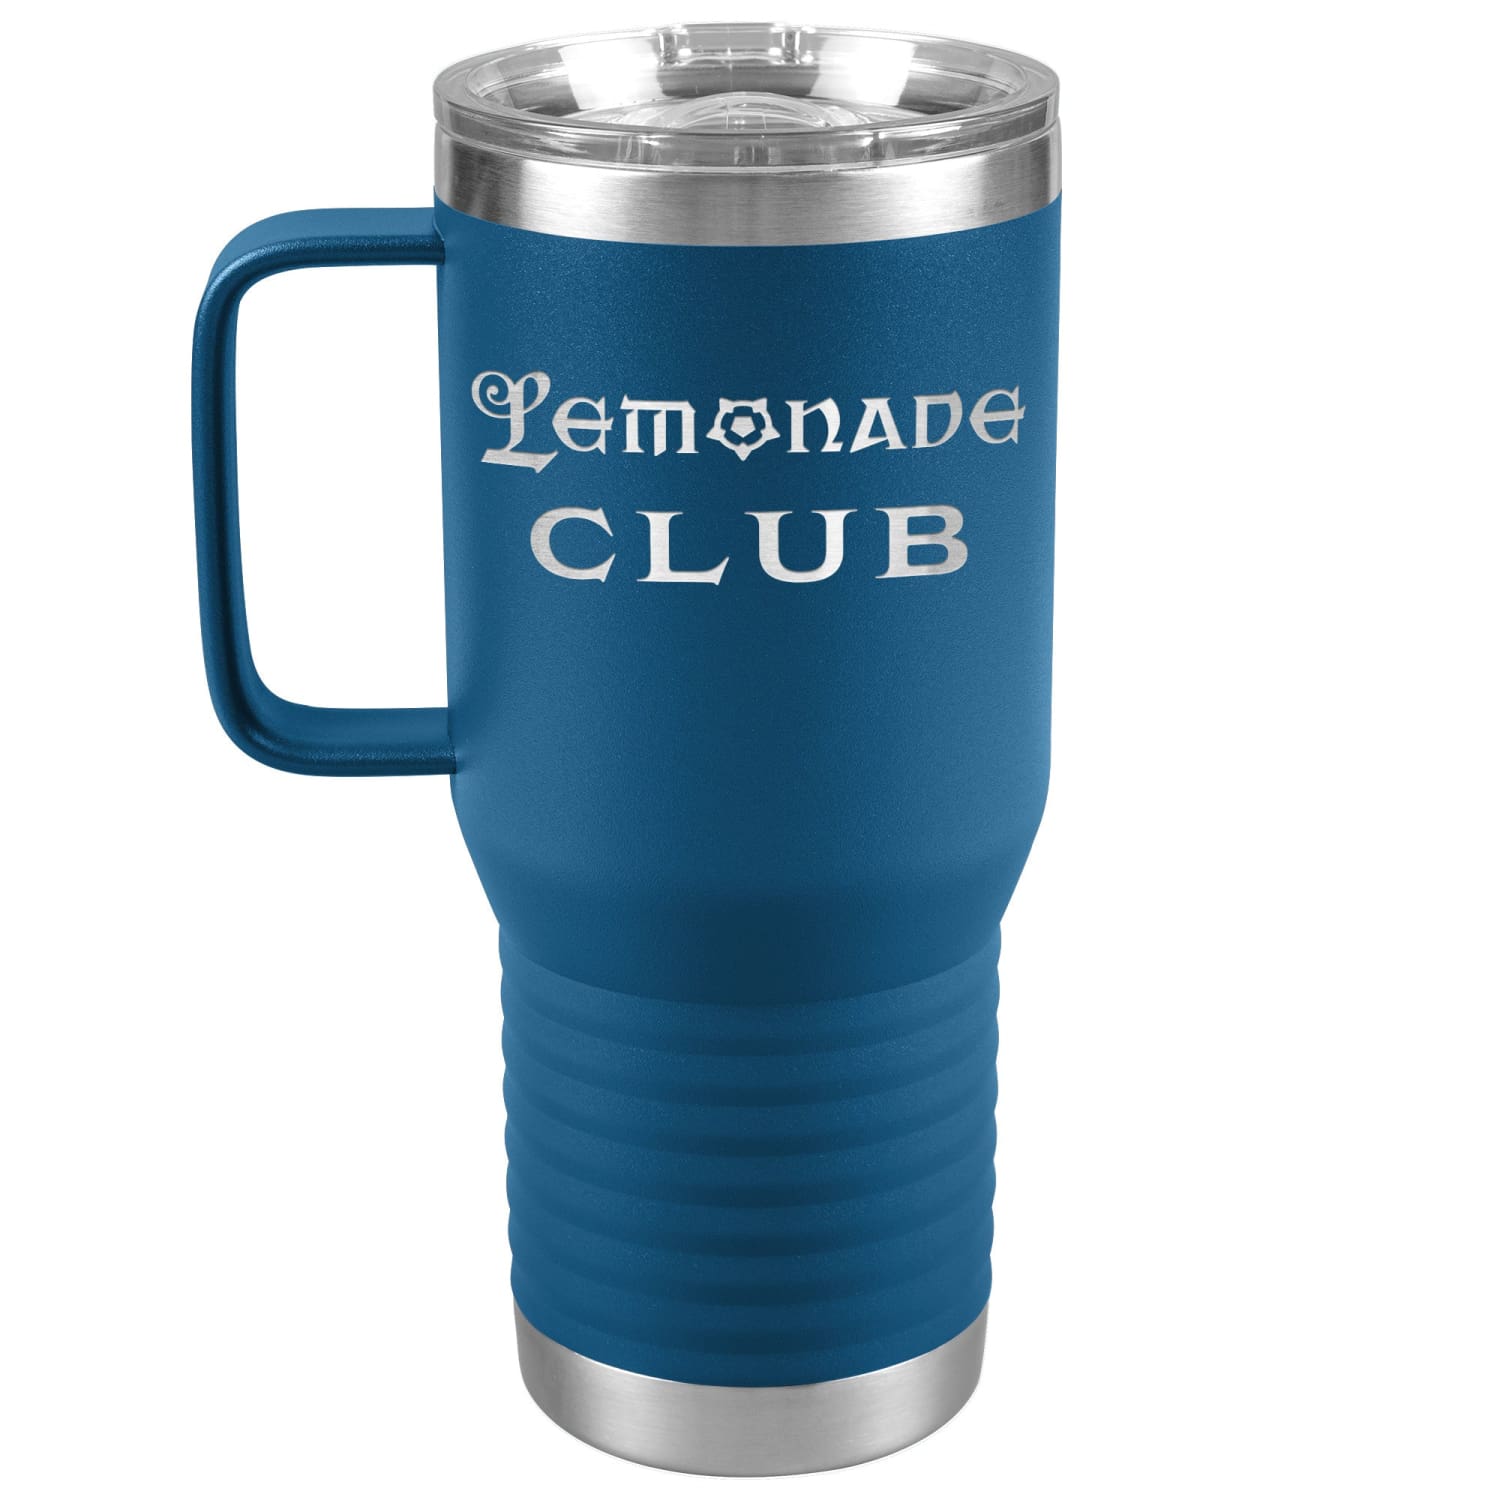 Arkenholdt Lemonade Club 20oz Travel Tumbler - Blue - Tumblers